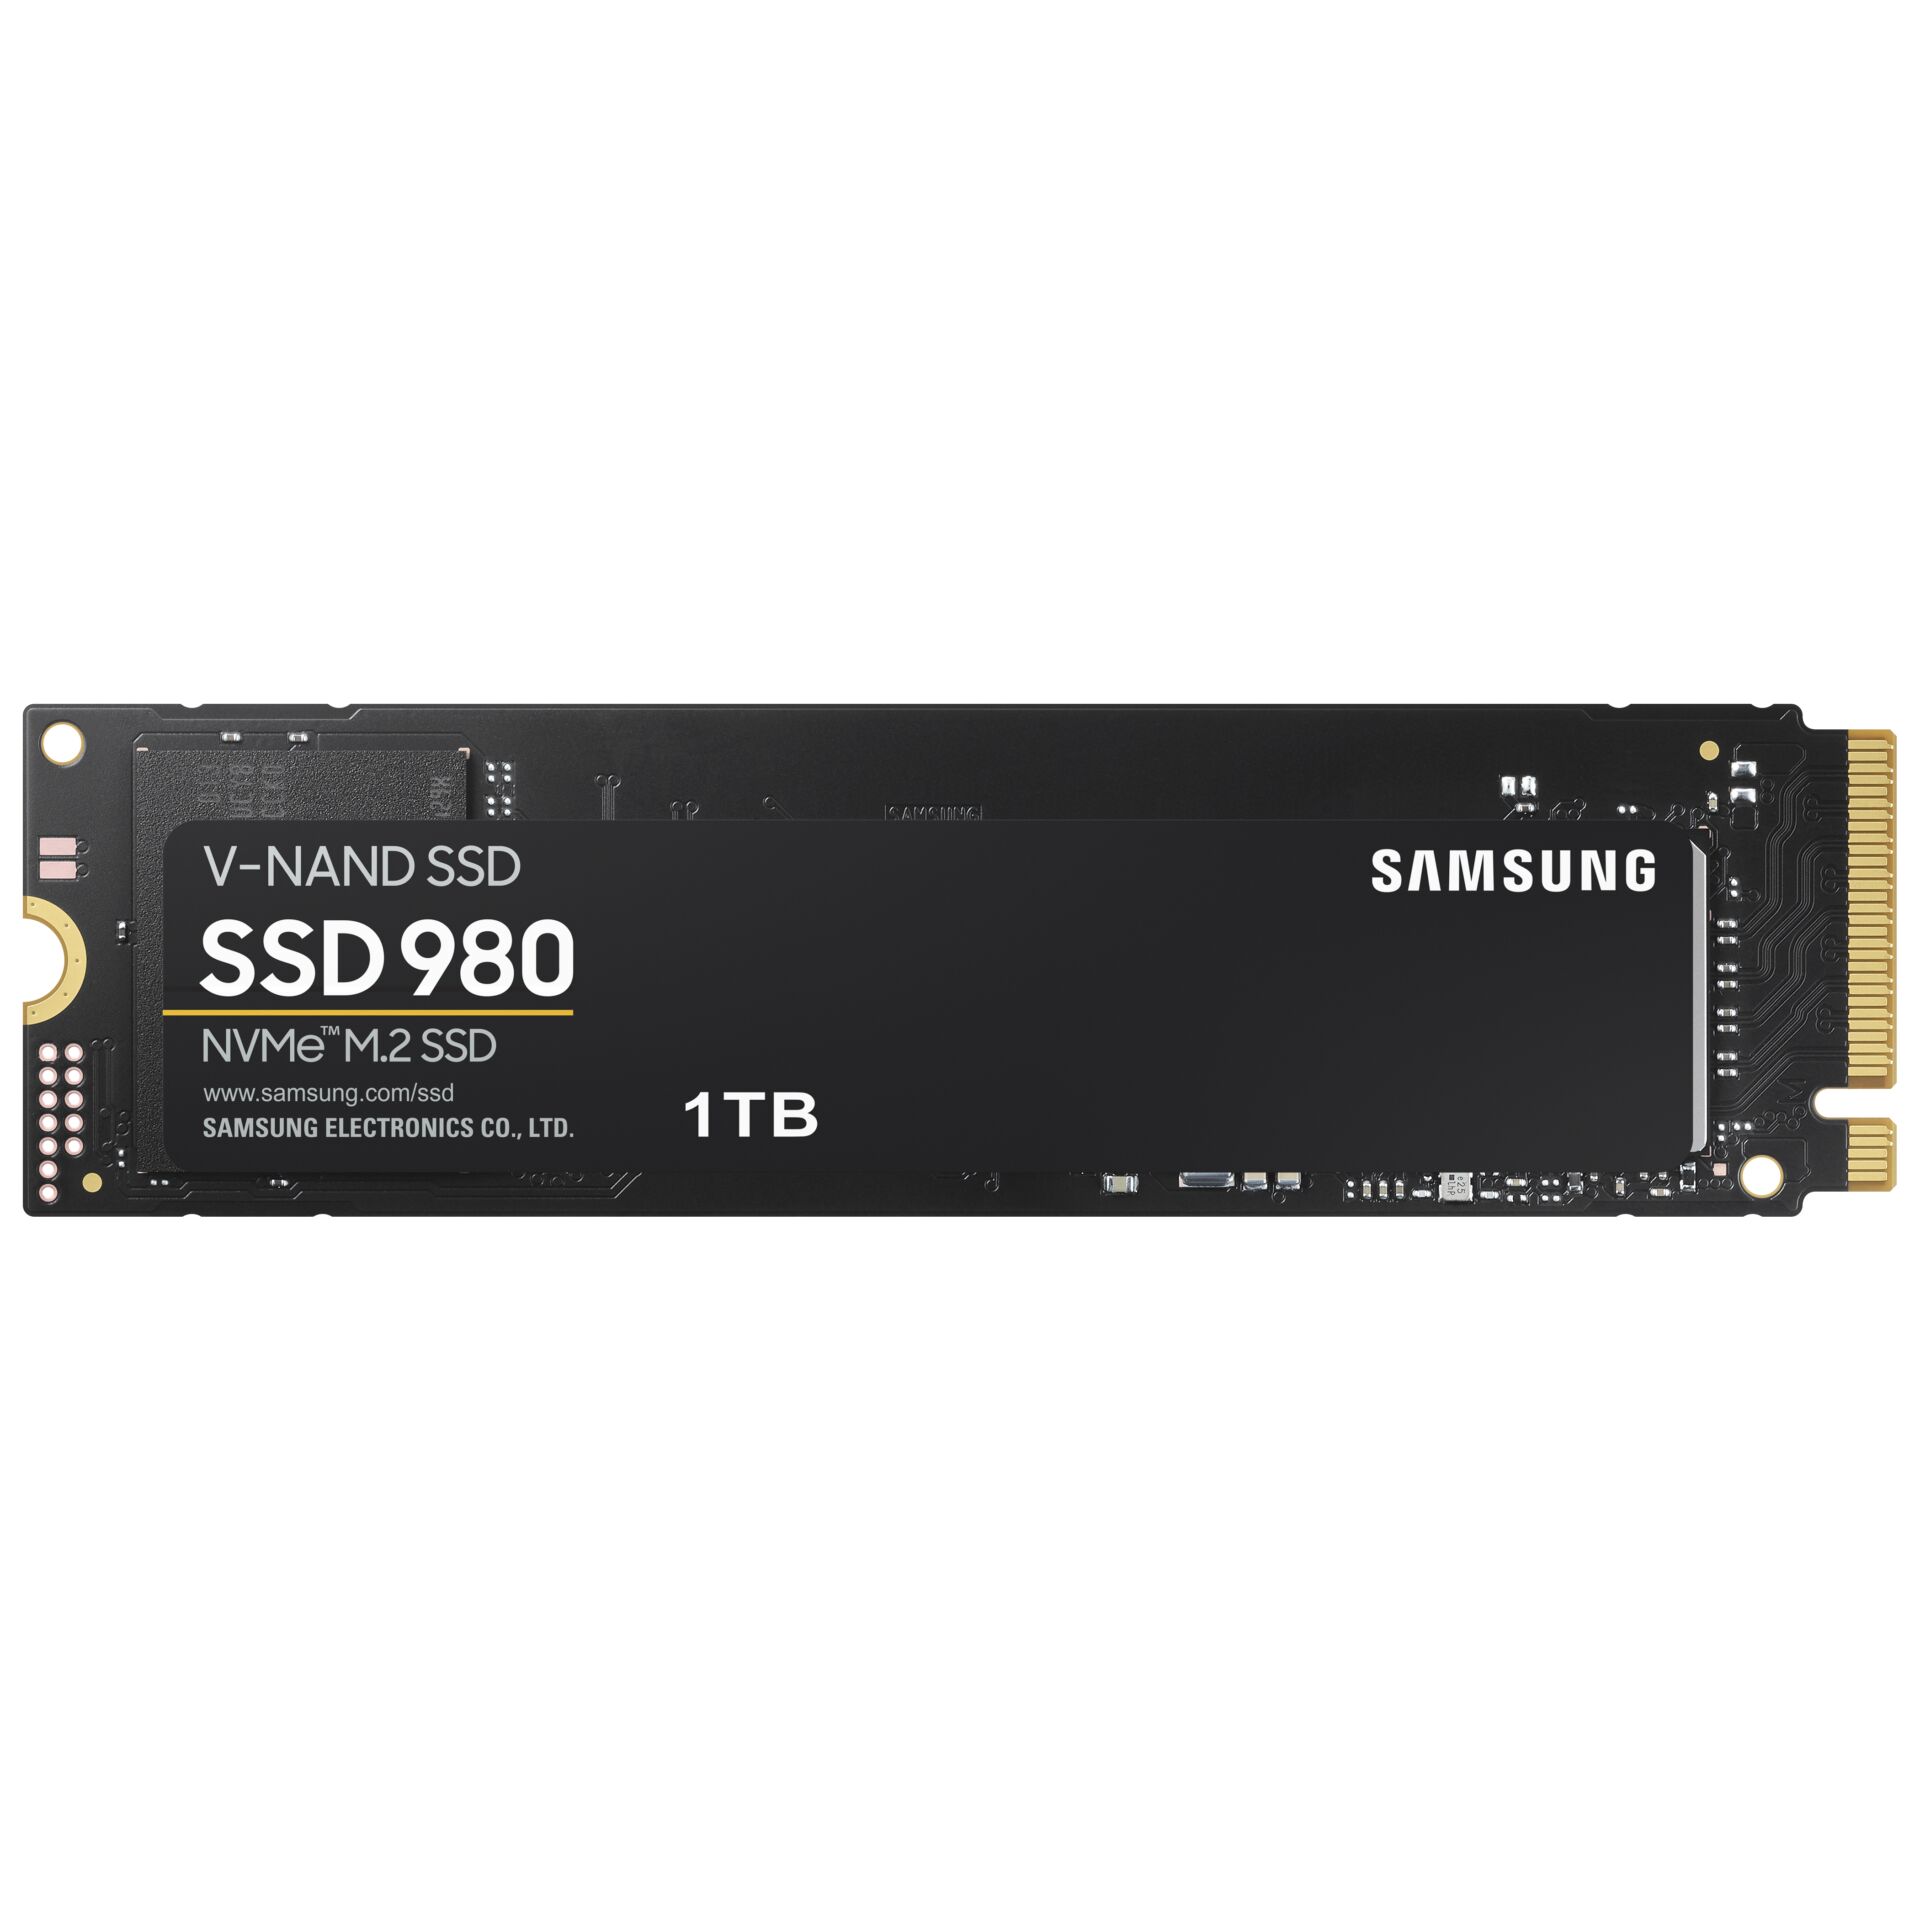 1.0 TB SSD Samsung 980, M.2/M-Key (PCIe 3.0 x4), lesen: 3500MB/s, schreiben: 3000MB/s SLC-Cached, TBW: 600TB